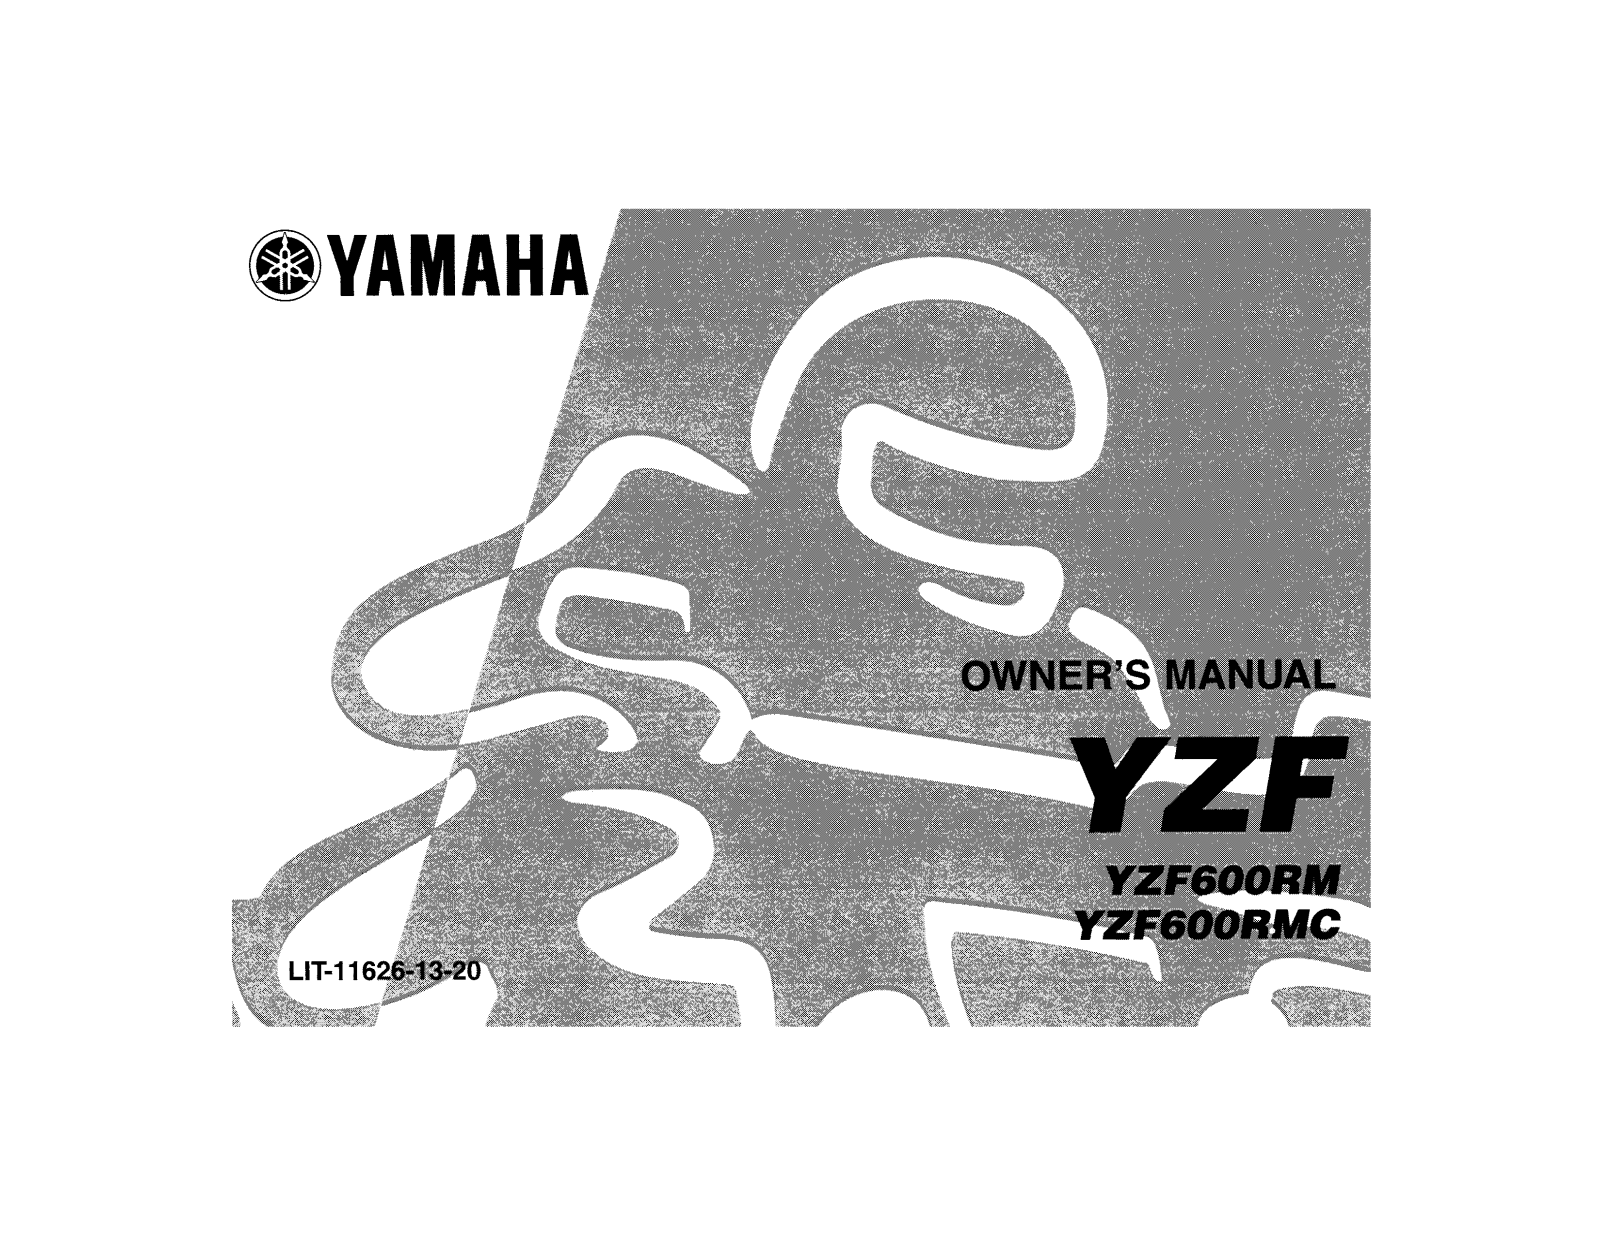 Yamaha YZF600RM, YZF600RMC Manual